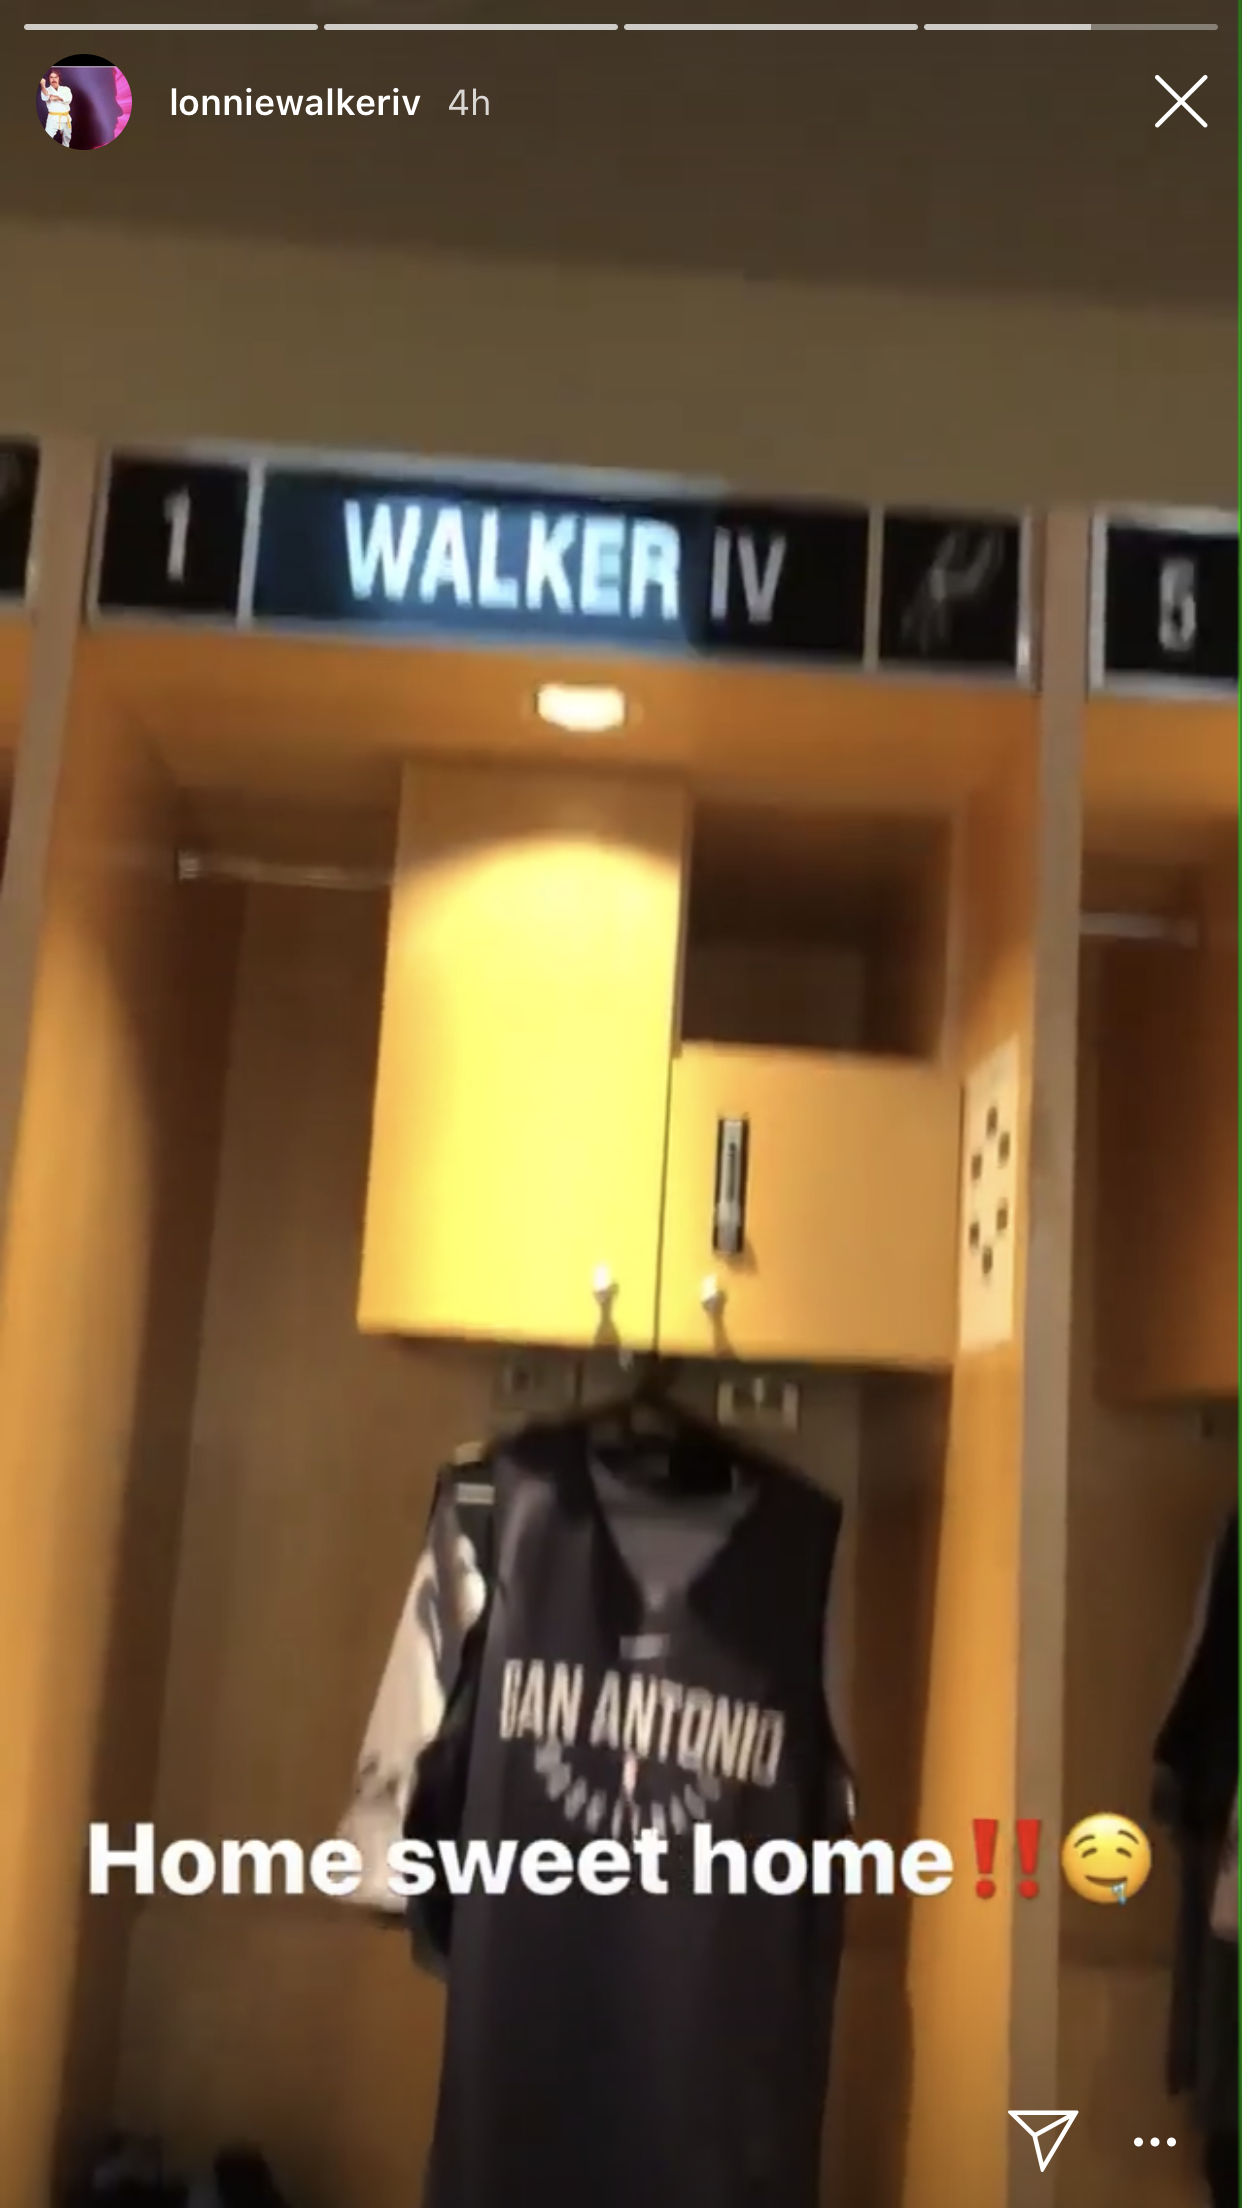 lonnie walker jersey number